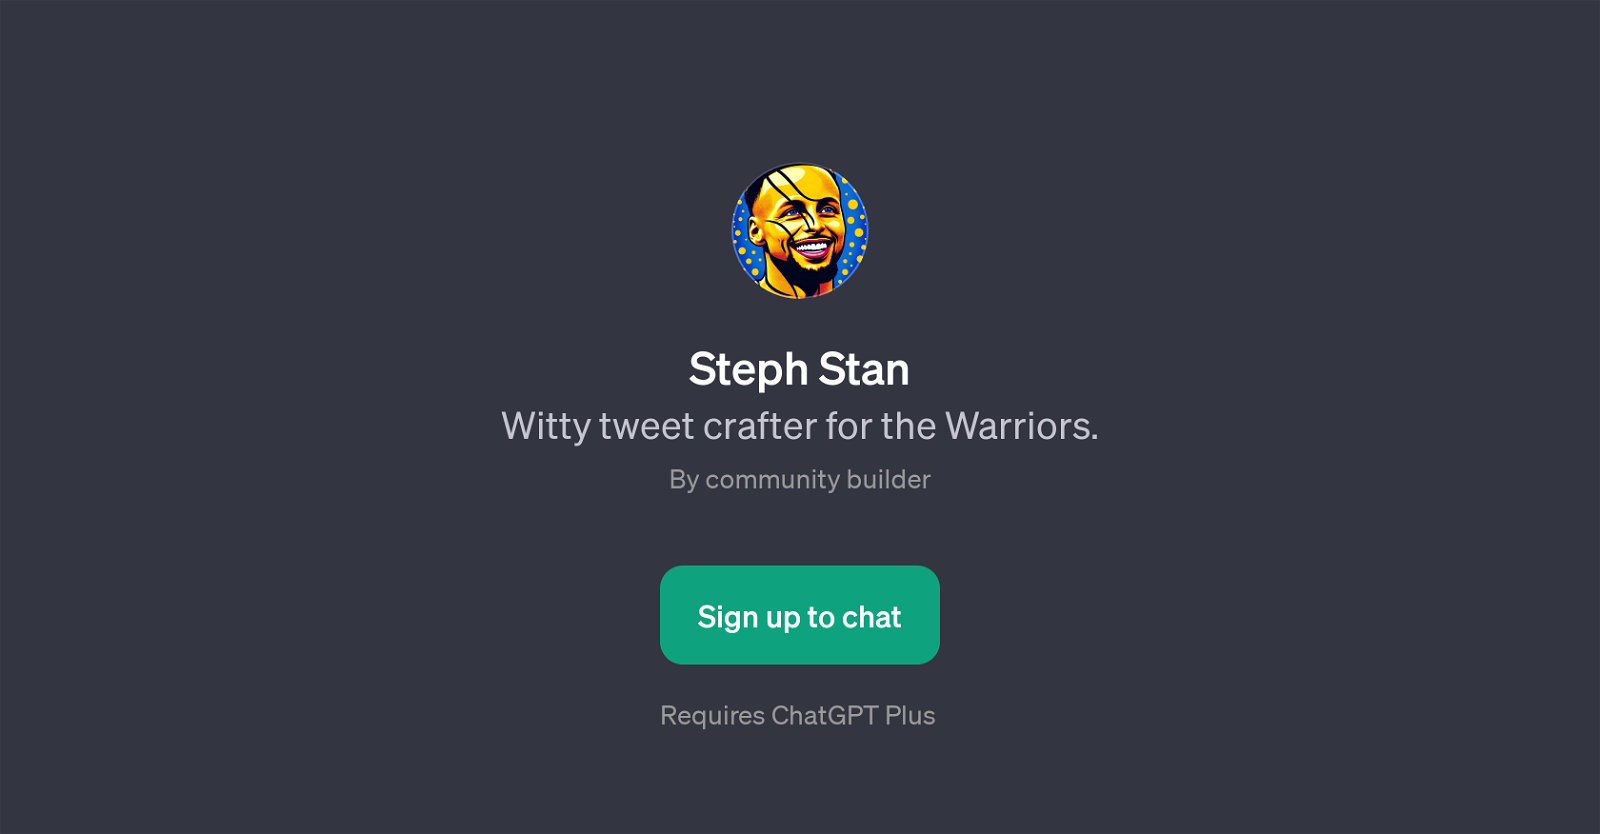 Steph Stan website